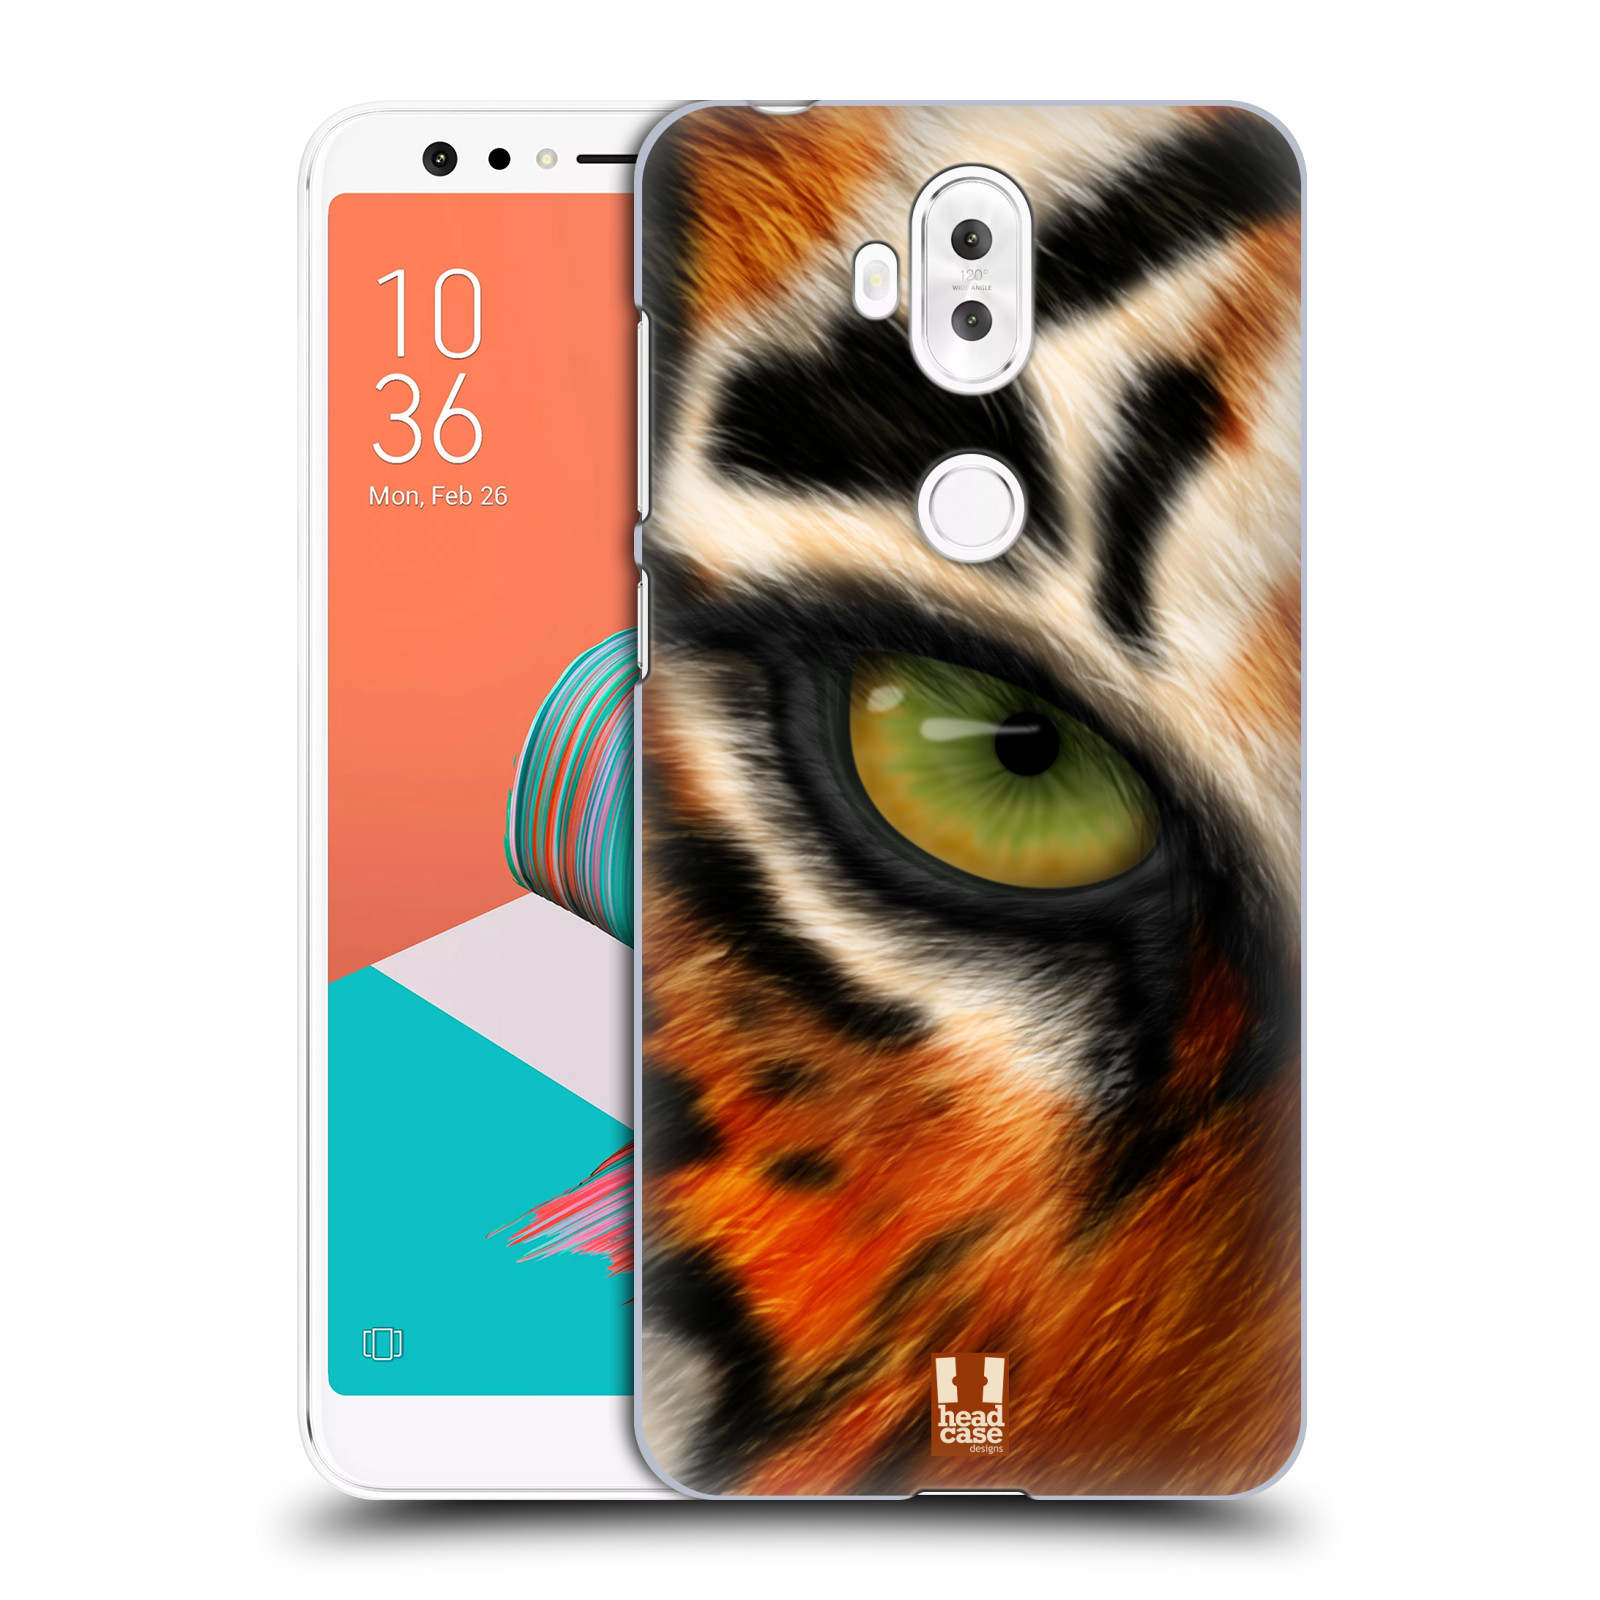 HEAD CASE plastový obal na mobil Asus Zenfone 5 LITE ZC600KL vzor pohled zvířete oko tygr